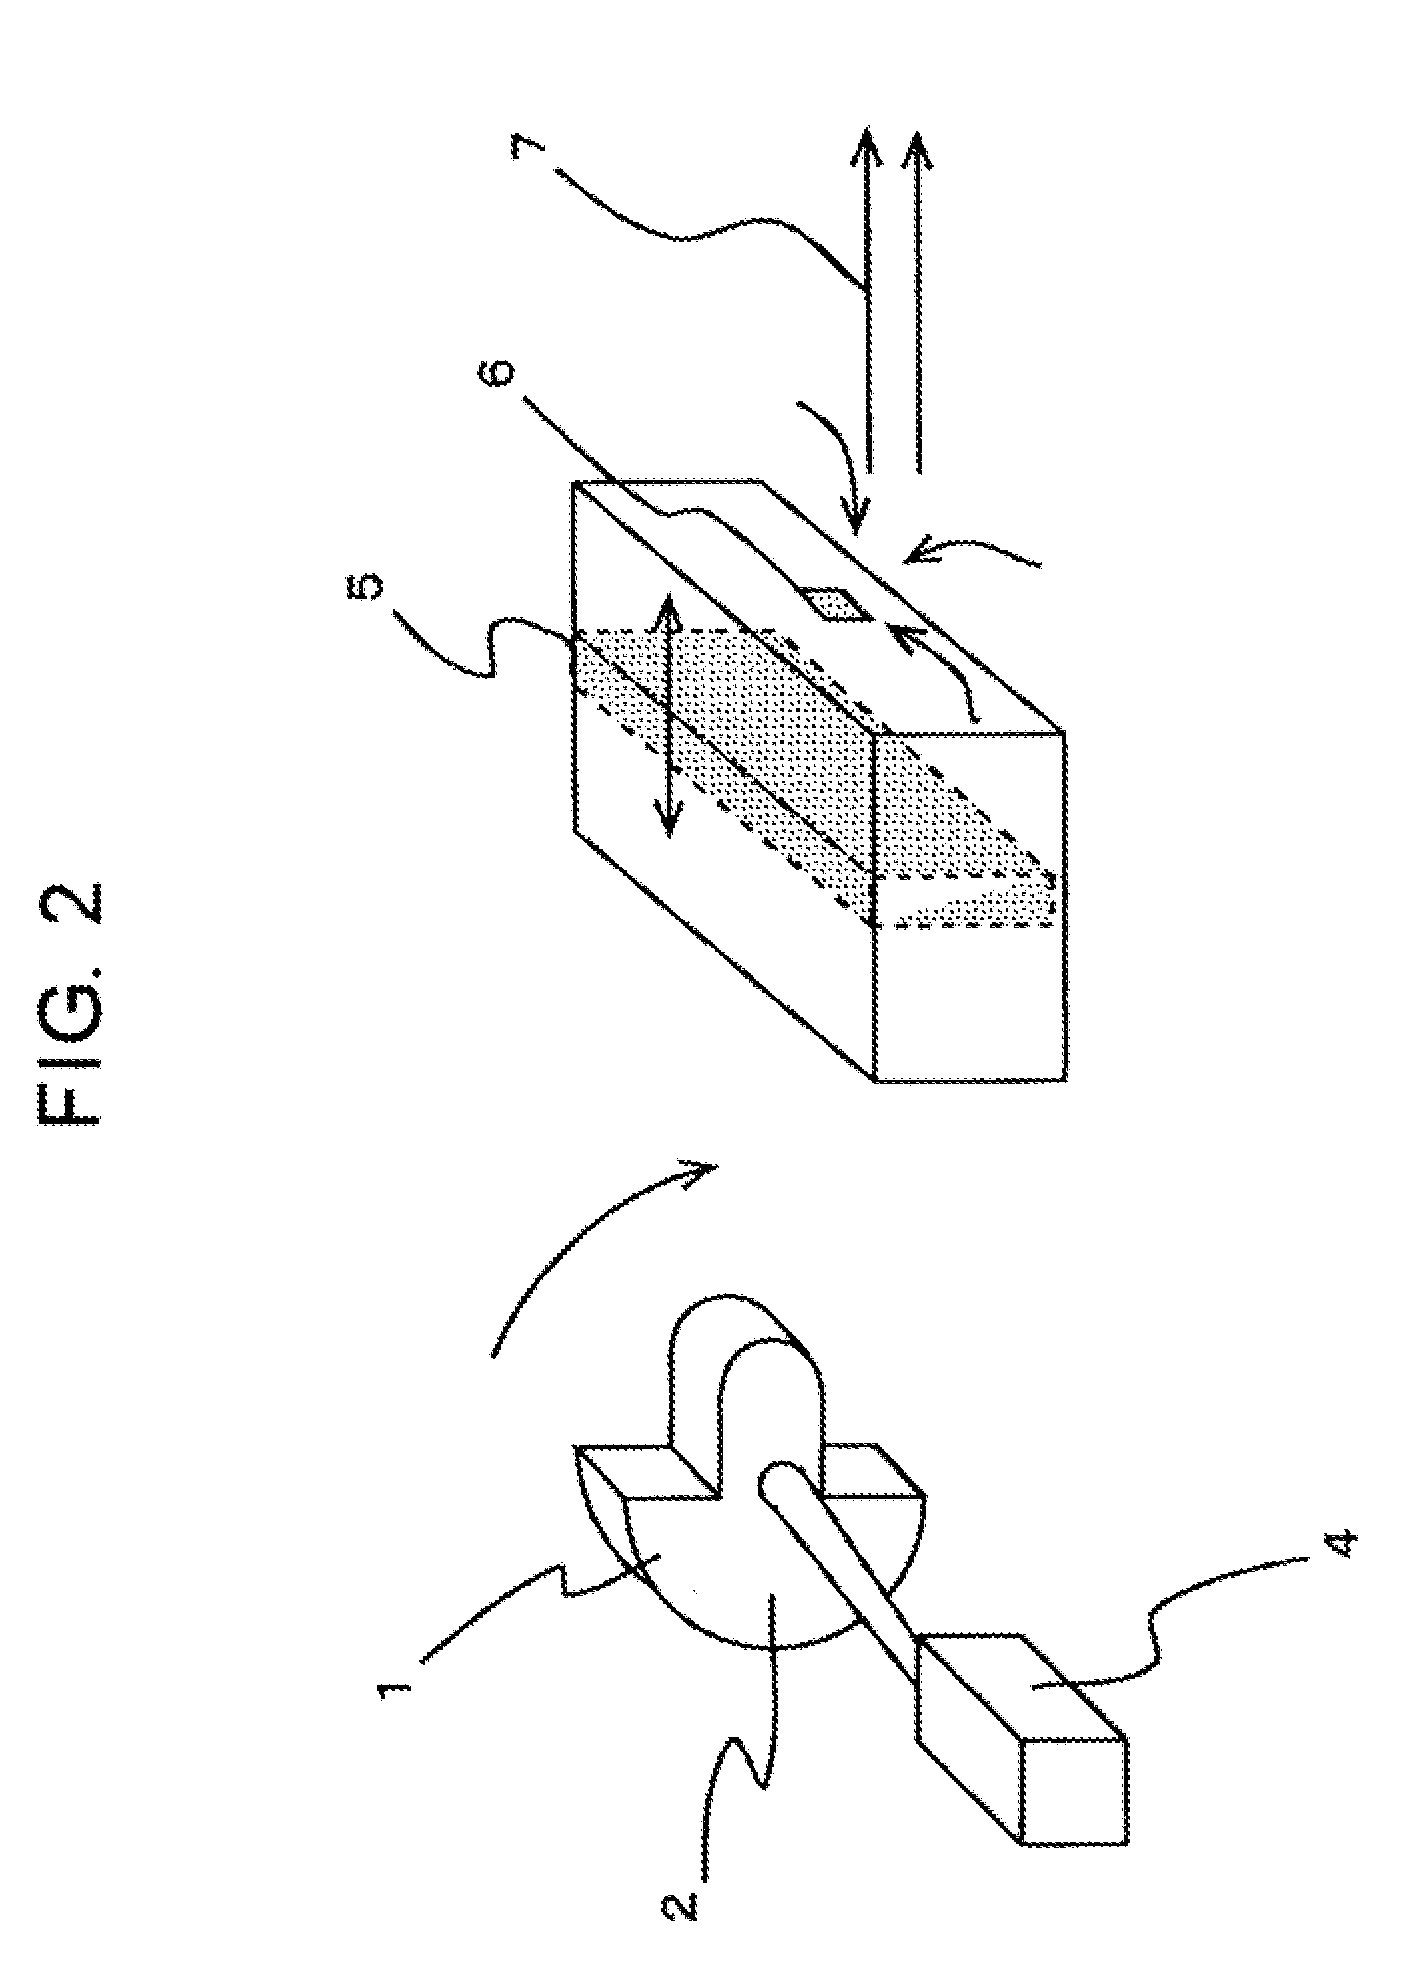 Vibration generating and cooling apparatus